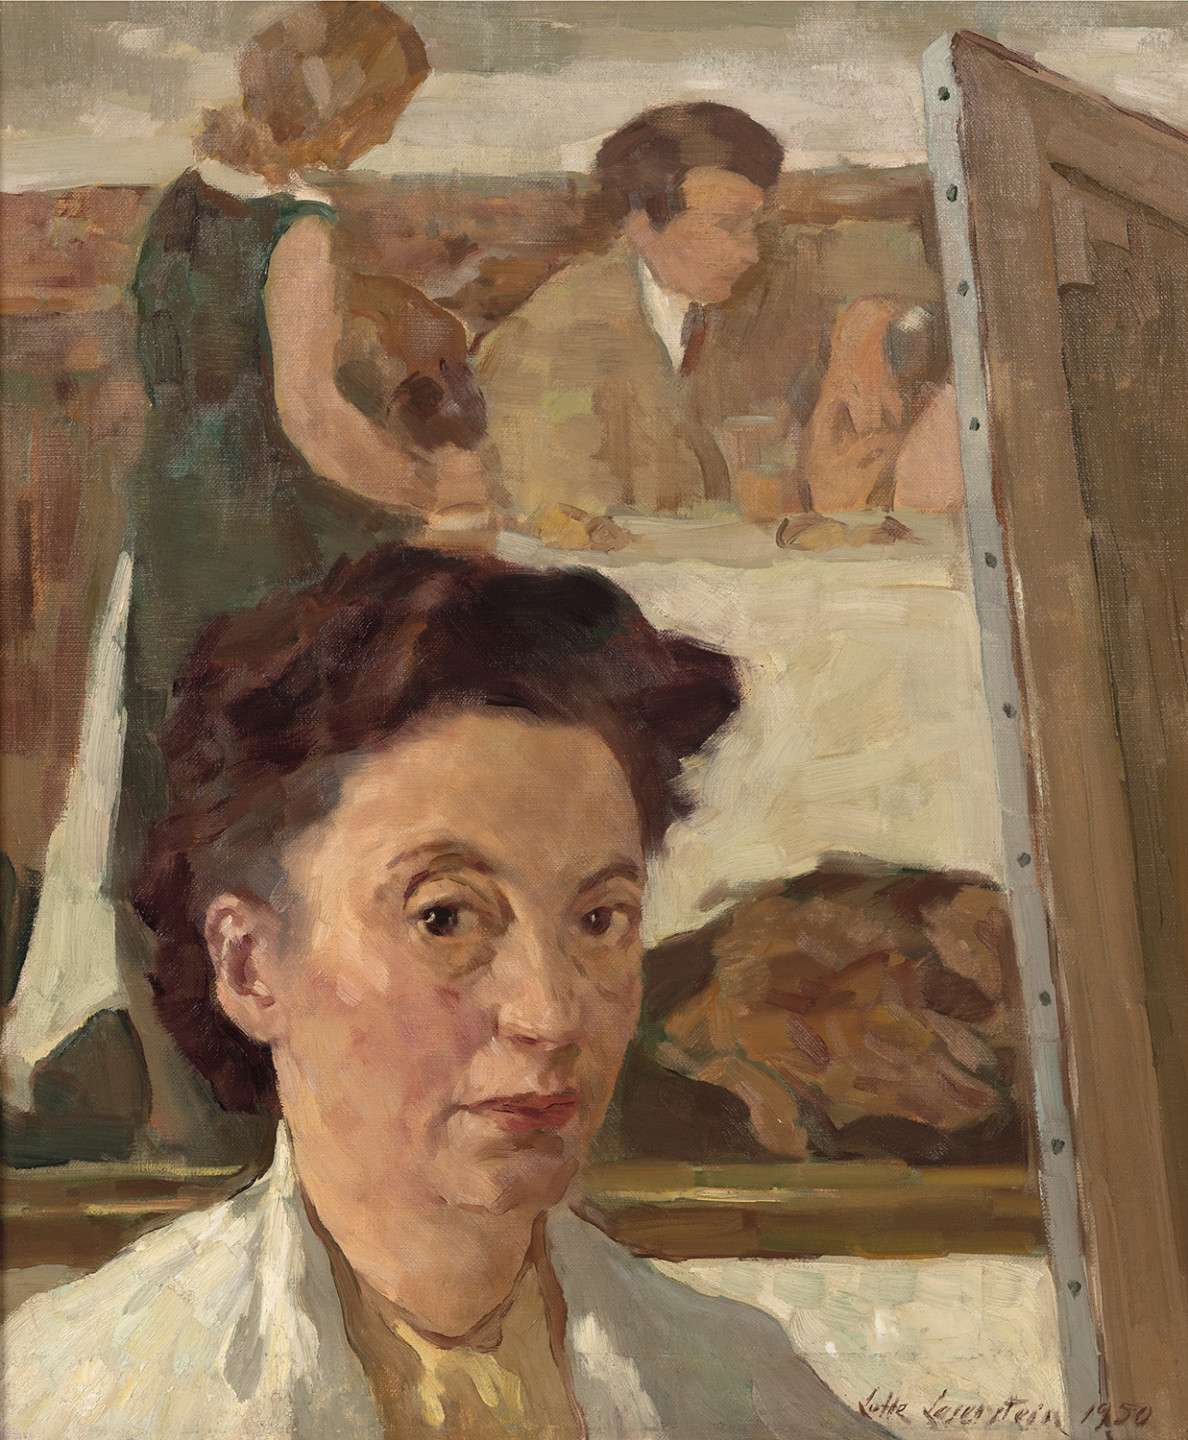 målning av kvinna med konstverk i bakgrunden